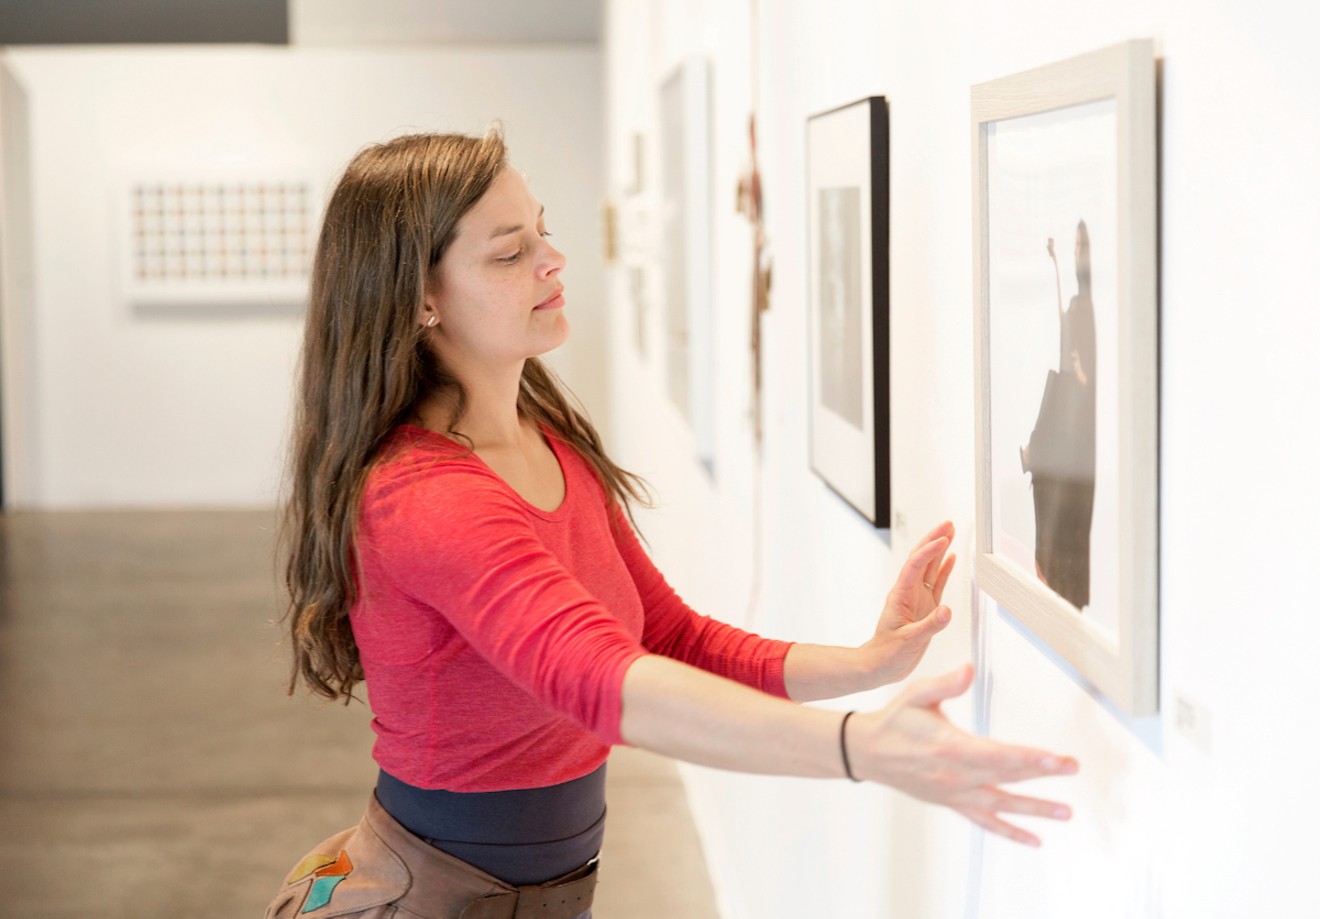 Jessica Kooiman Parker adjusts an artwork in the gallery.